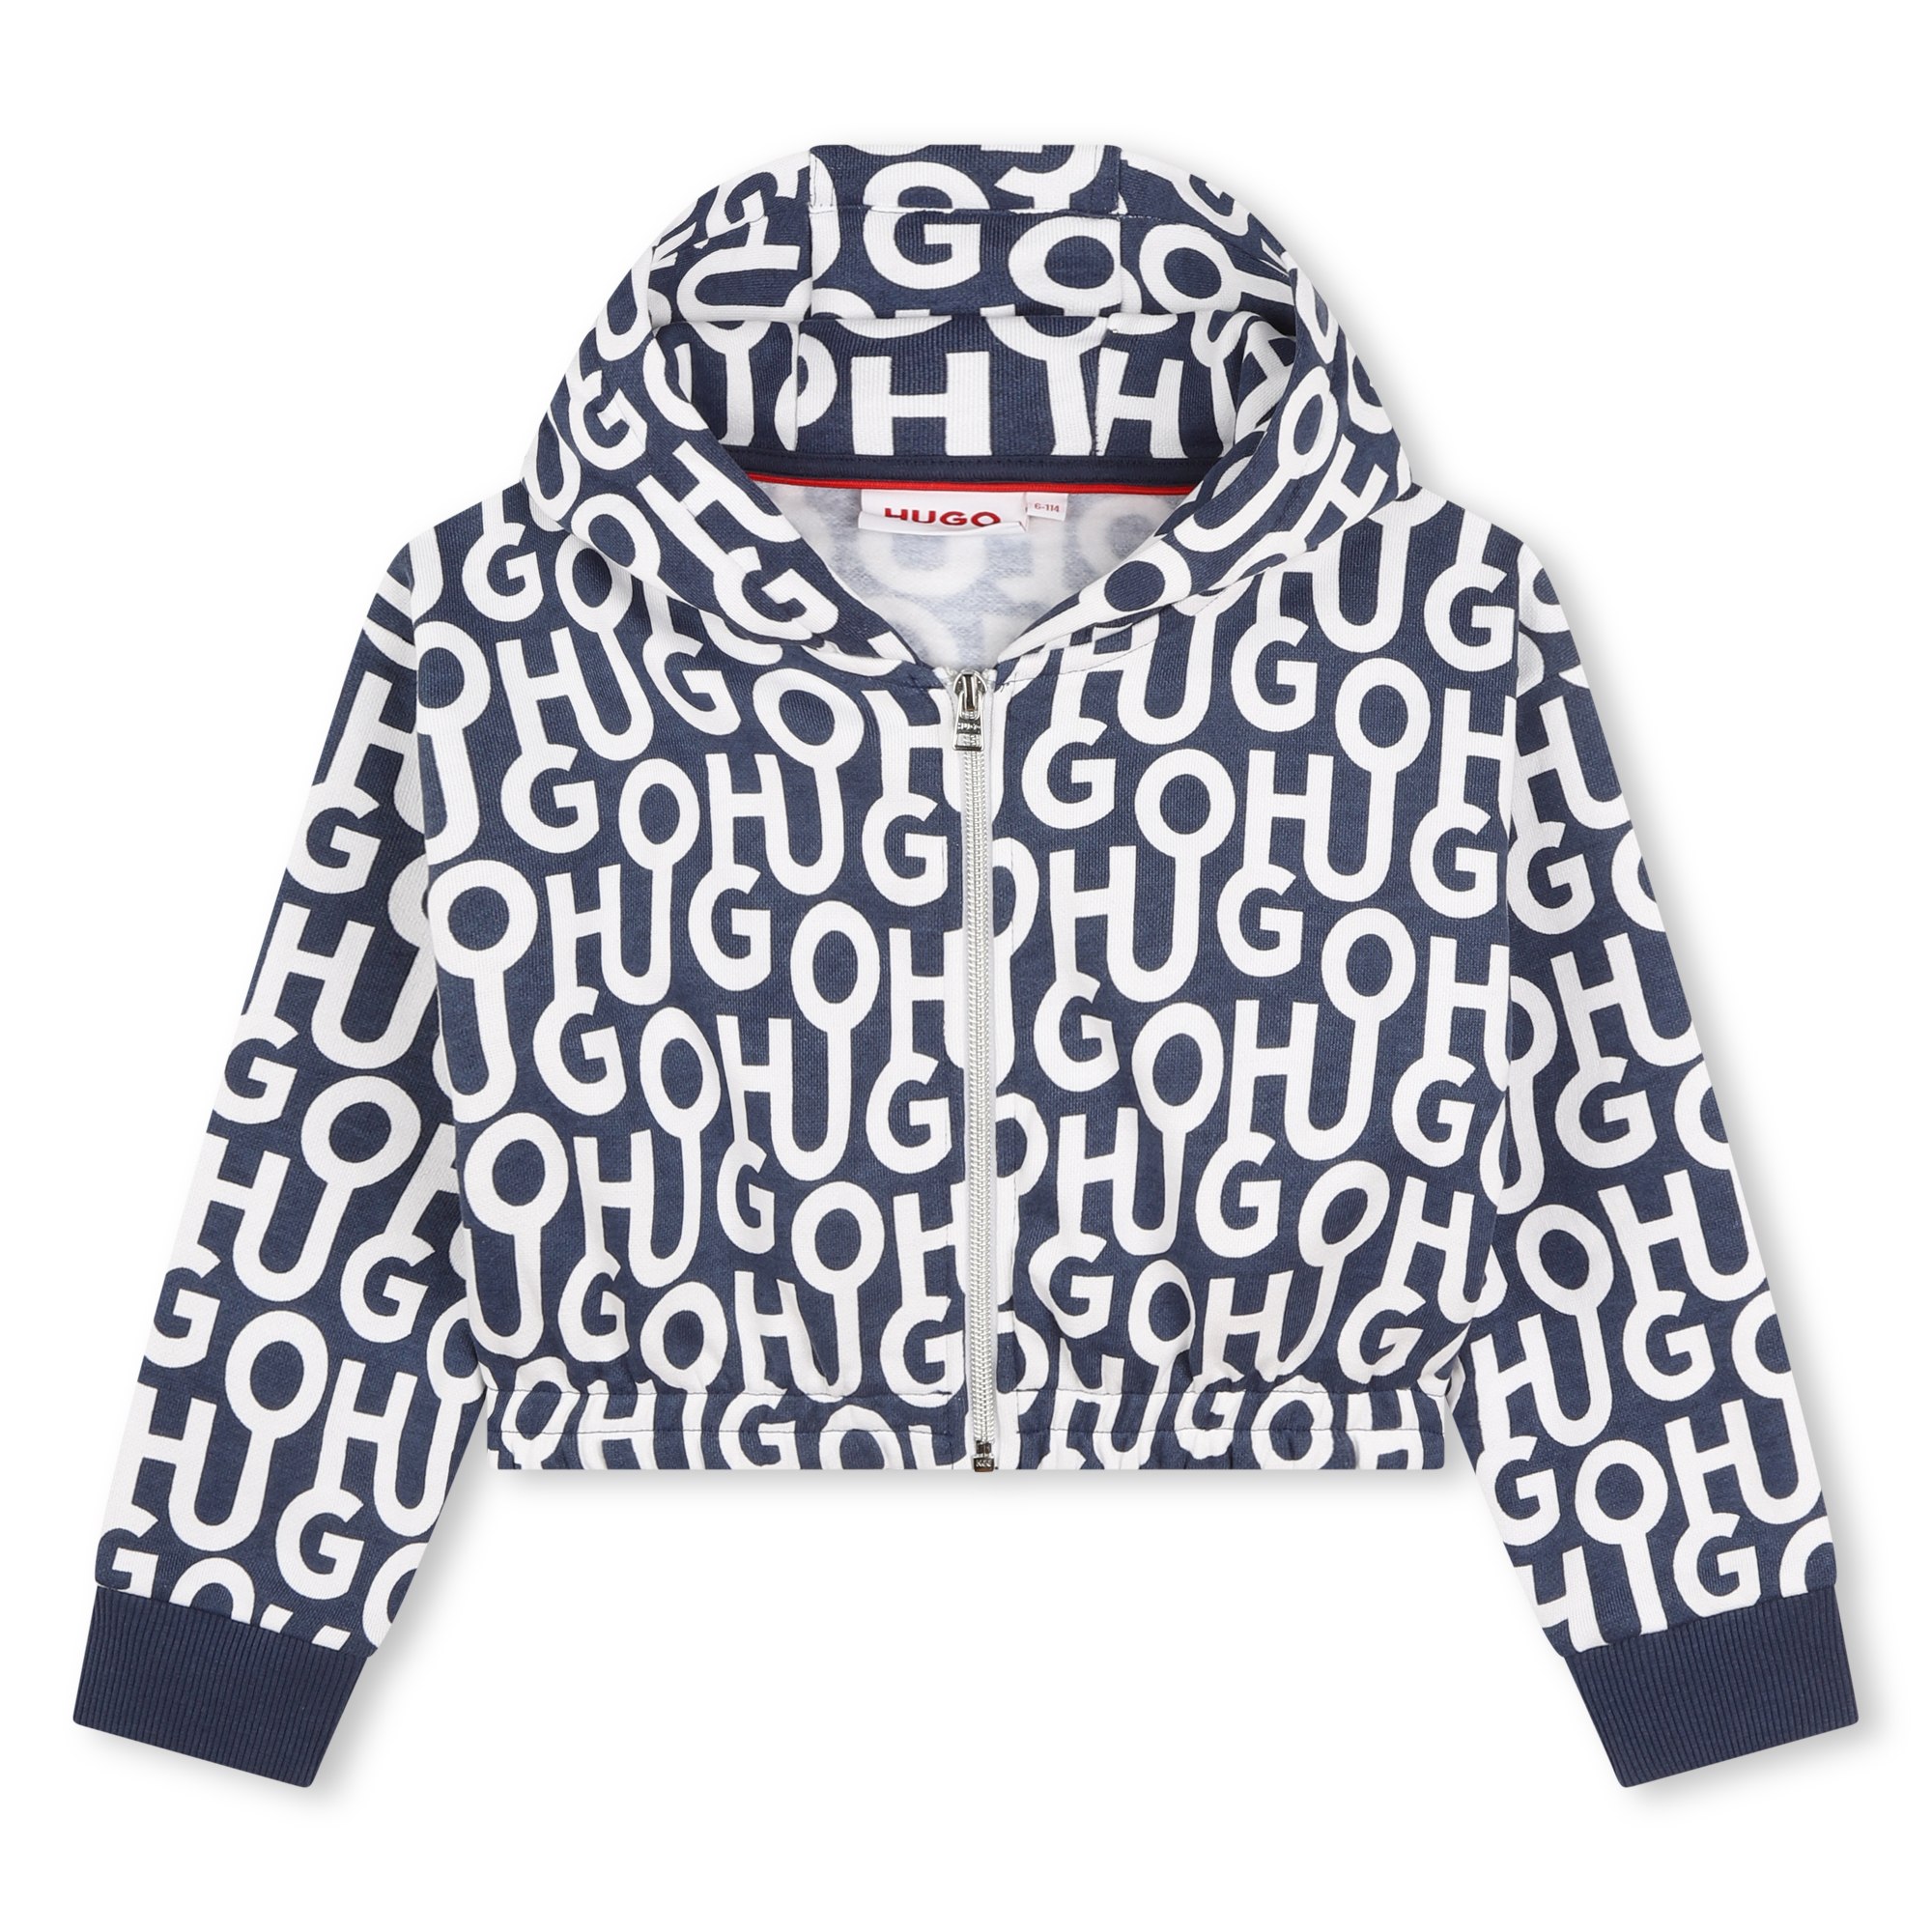 BOSS - Zip-up sweatshirt with monogram print